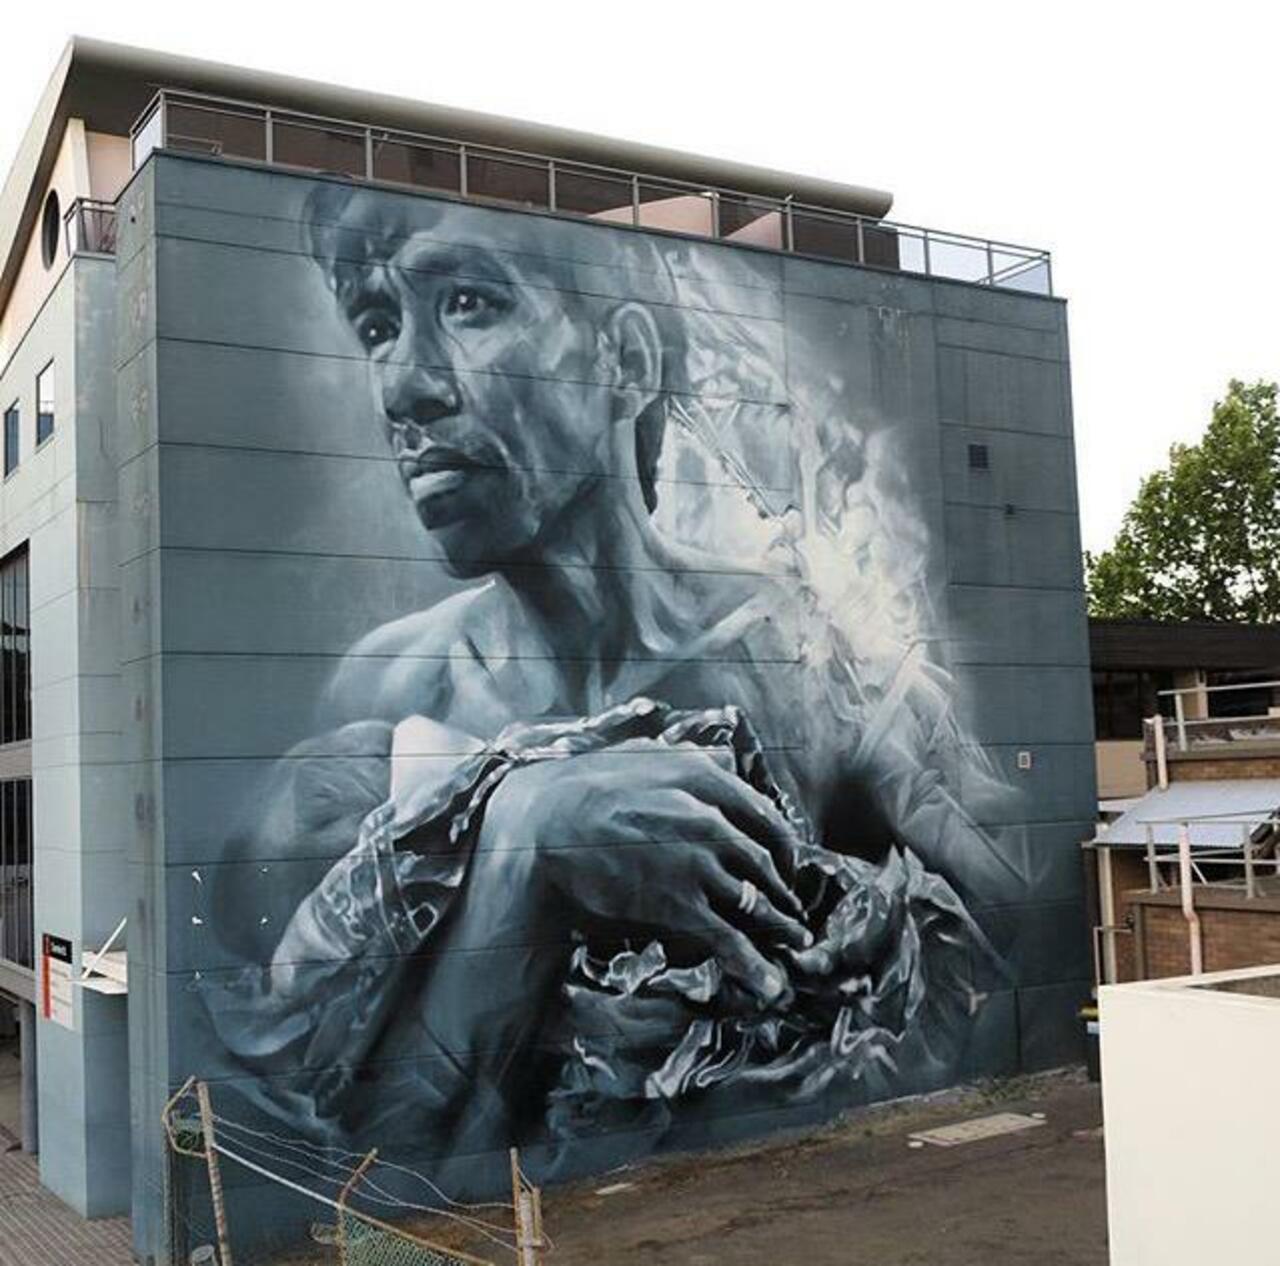 New tumblr post: "New Street Art by Guido Van Helten in Wollongong Australia 

#art #graffiti #mural #streetart http://t.co/22FN3GdB69" …